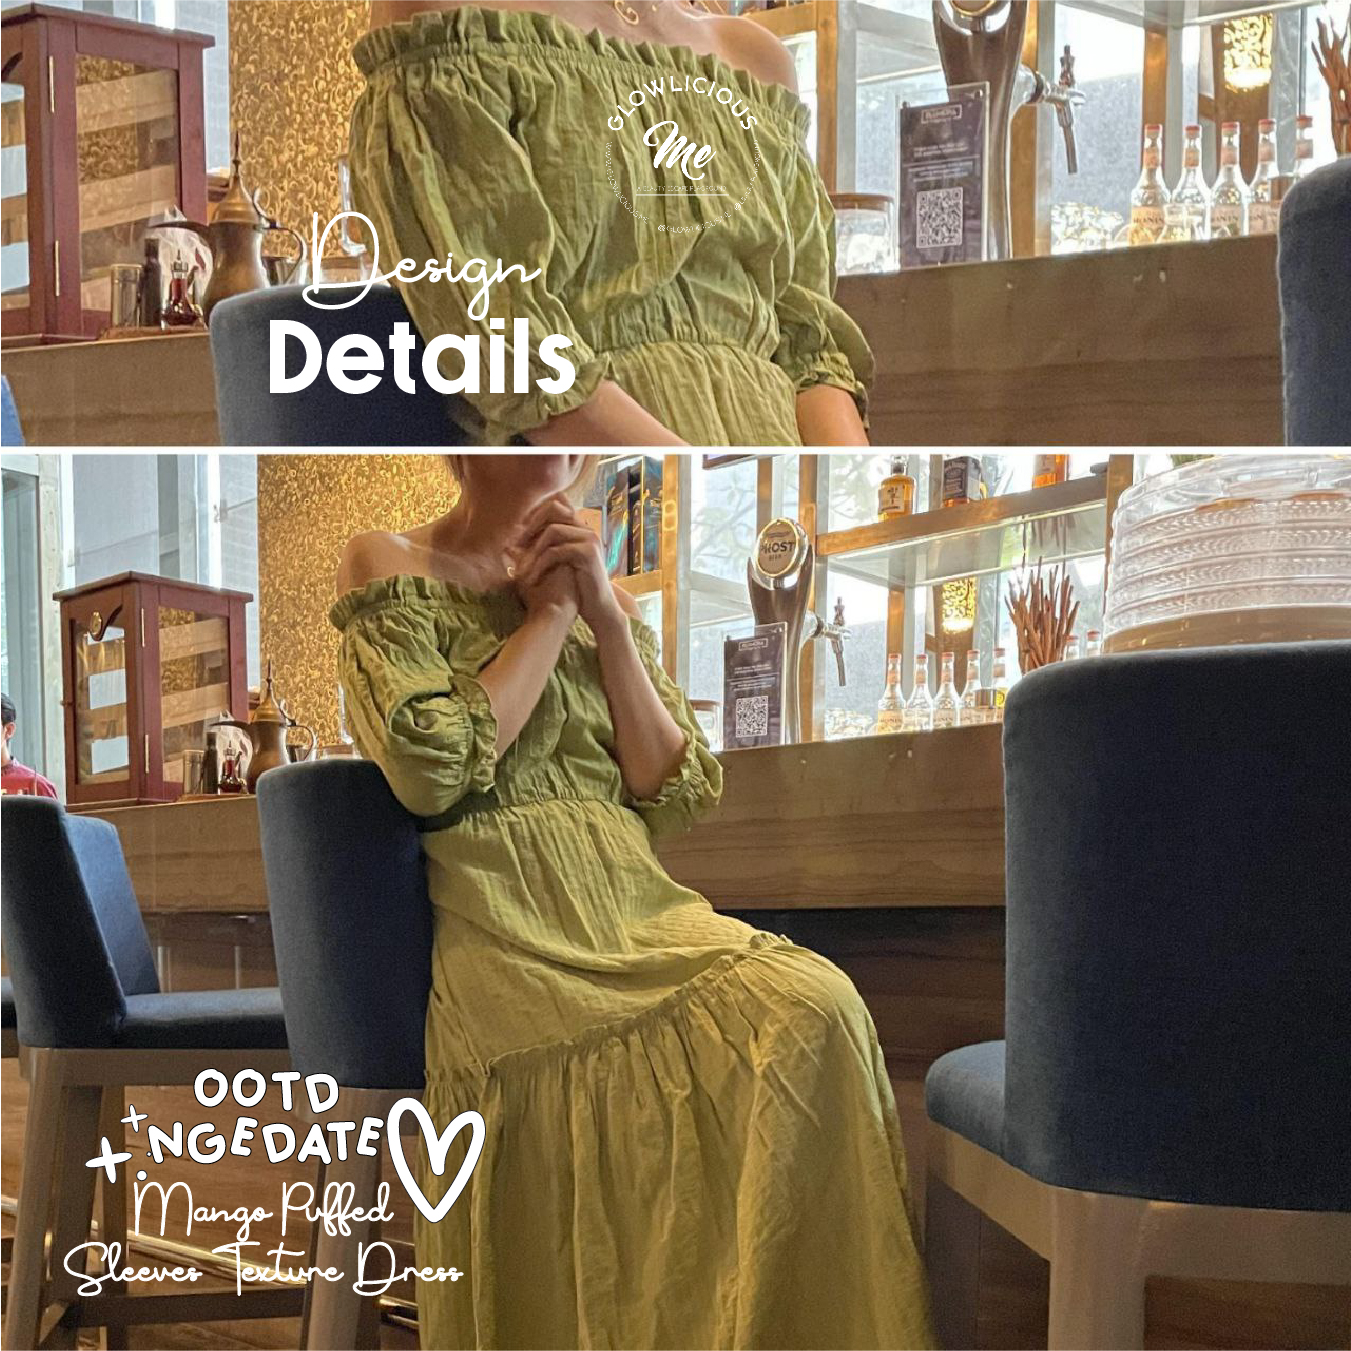 OOTD Ngedate Romantic Dinner Date - Mango Puffed Sleeves Texture Dress - Details Design